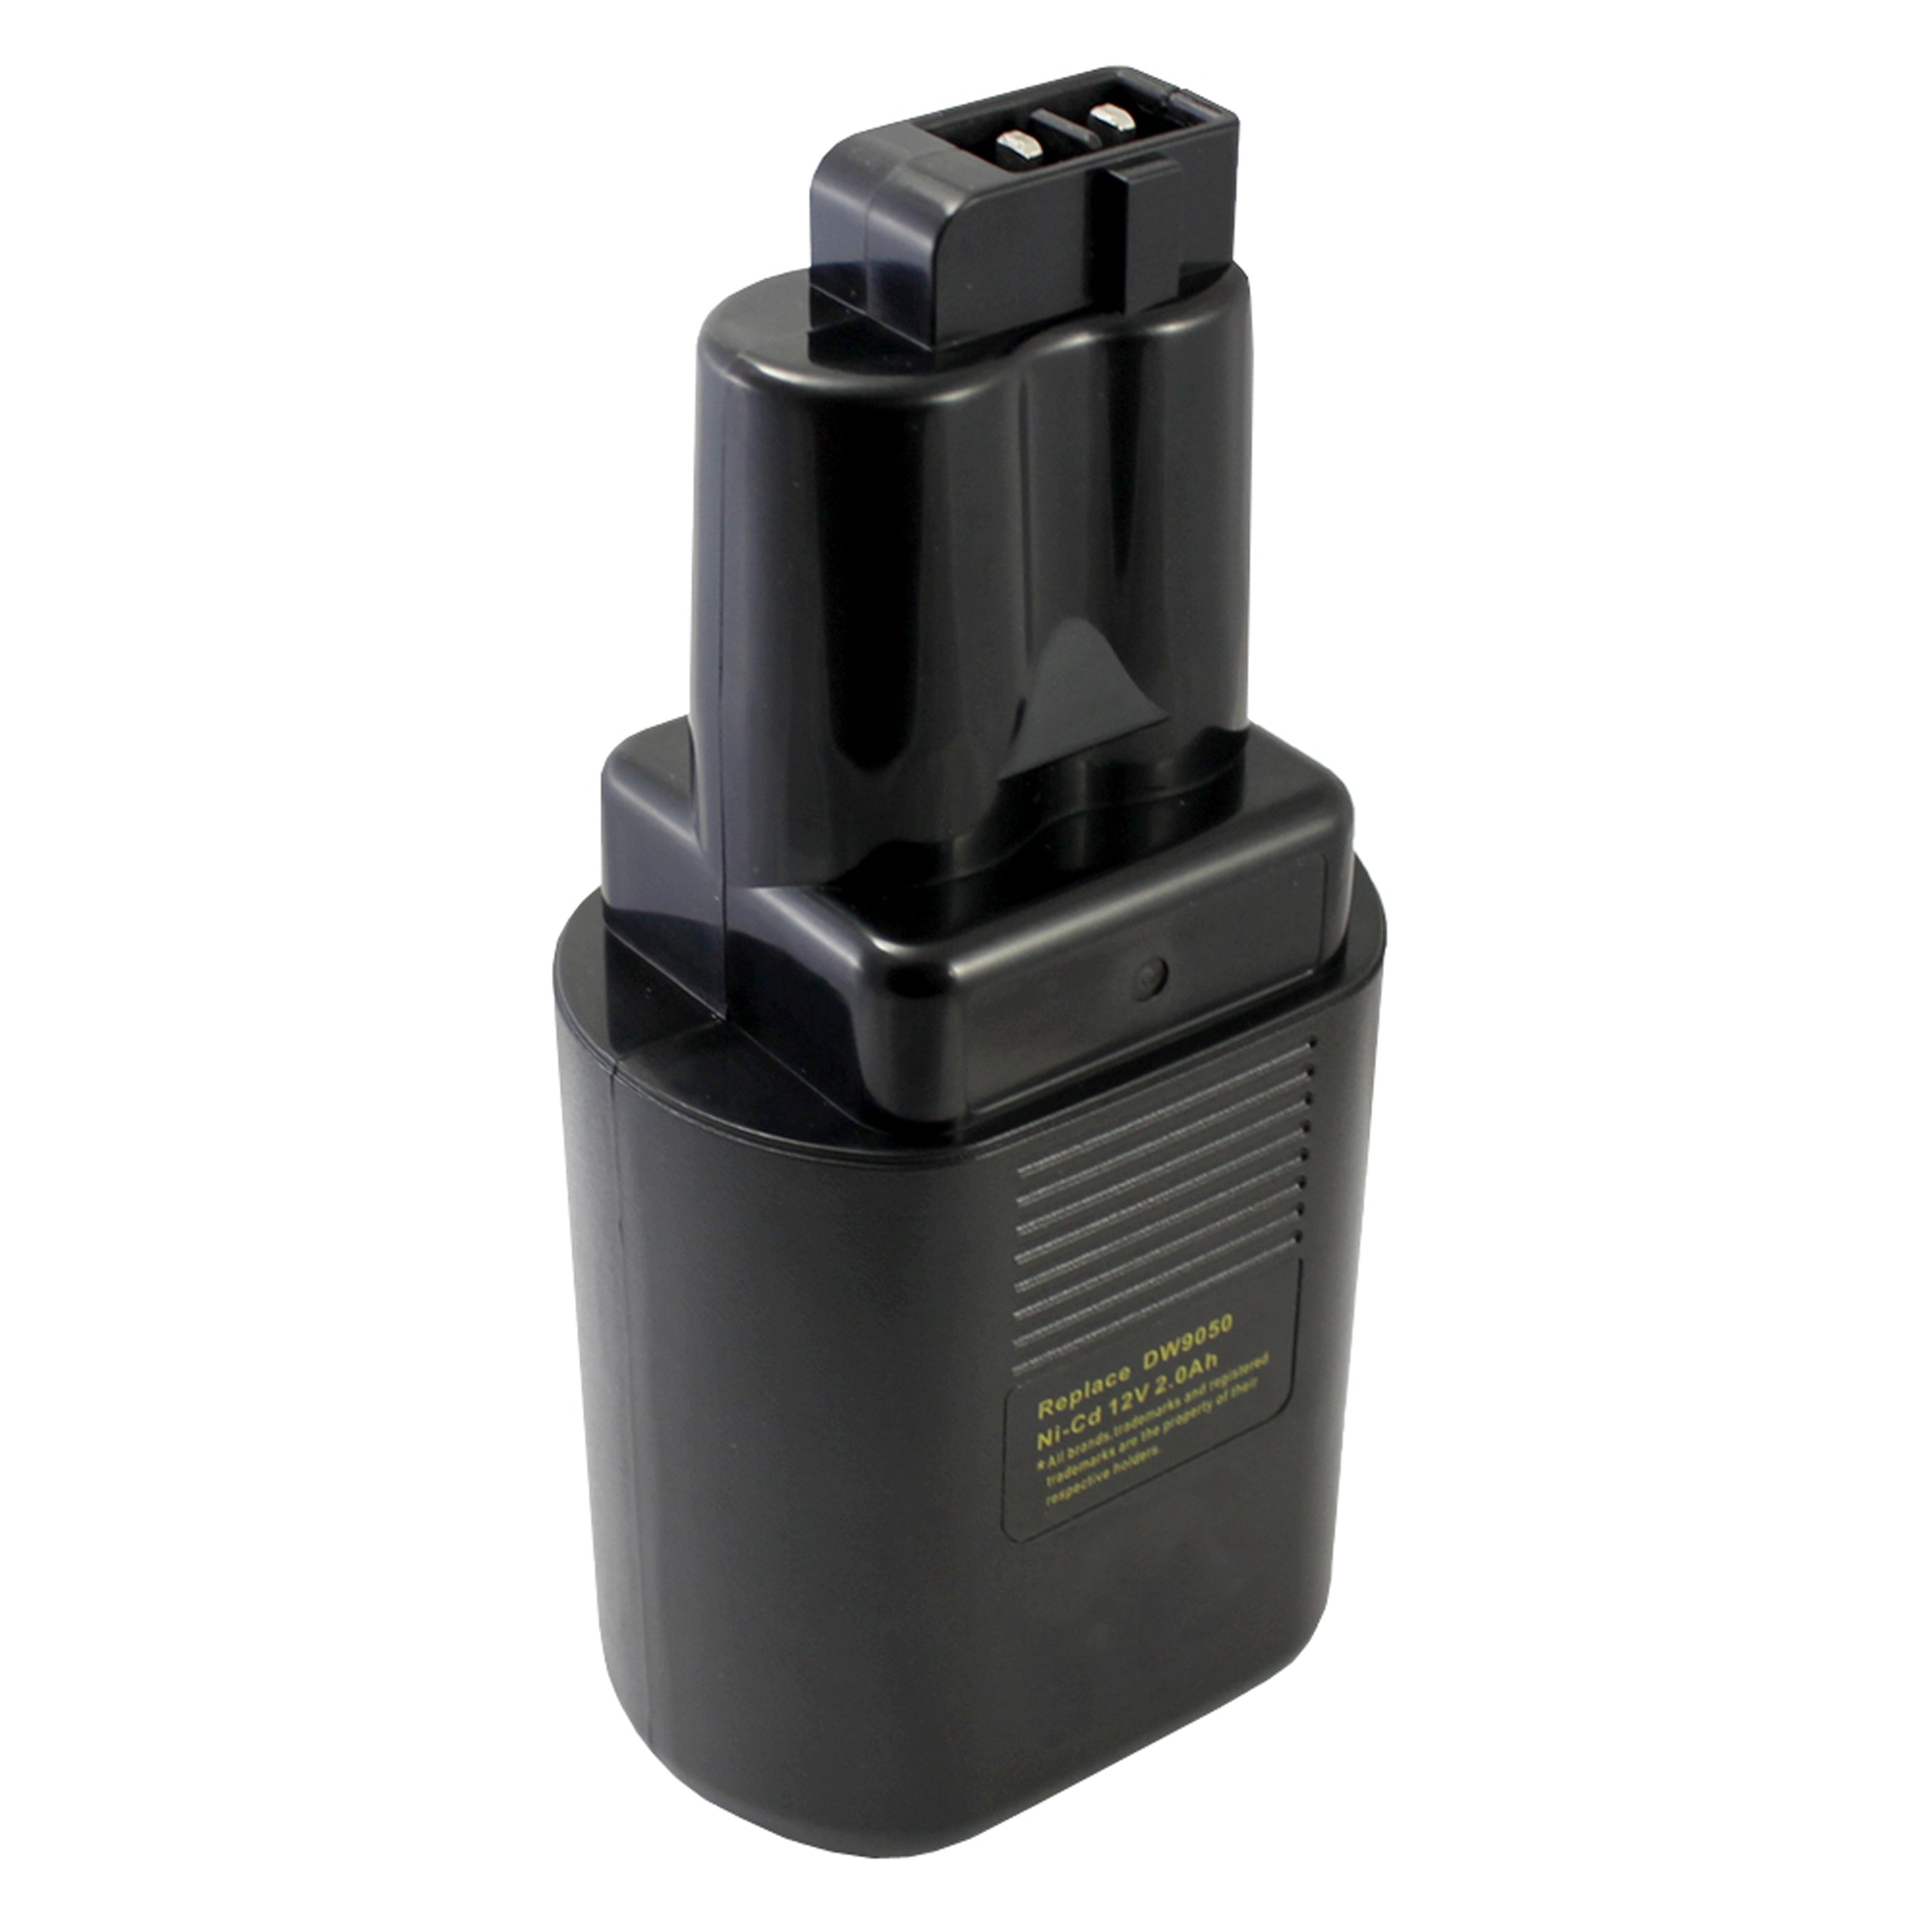 Replacement Black & Decker, Dewalt Power Tool Battery (12V, 2.0Ah, NiCd)